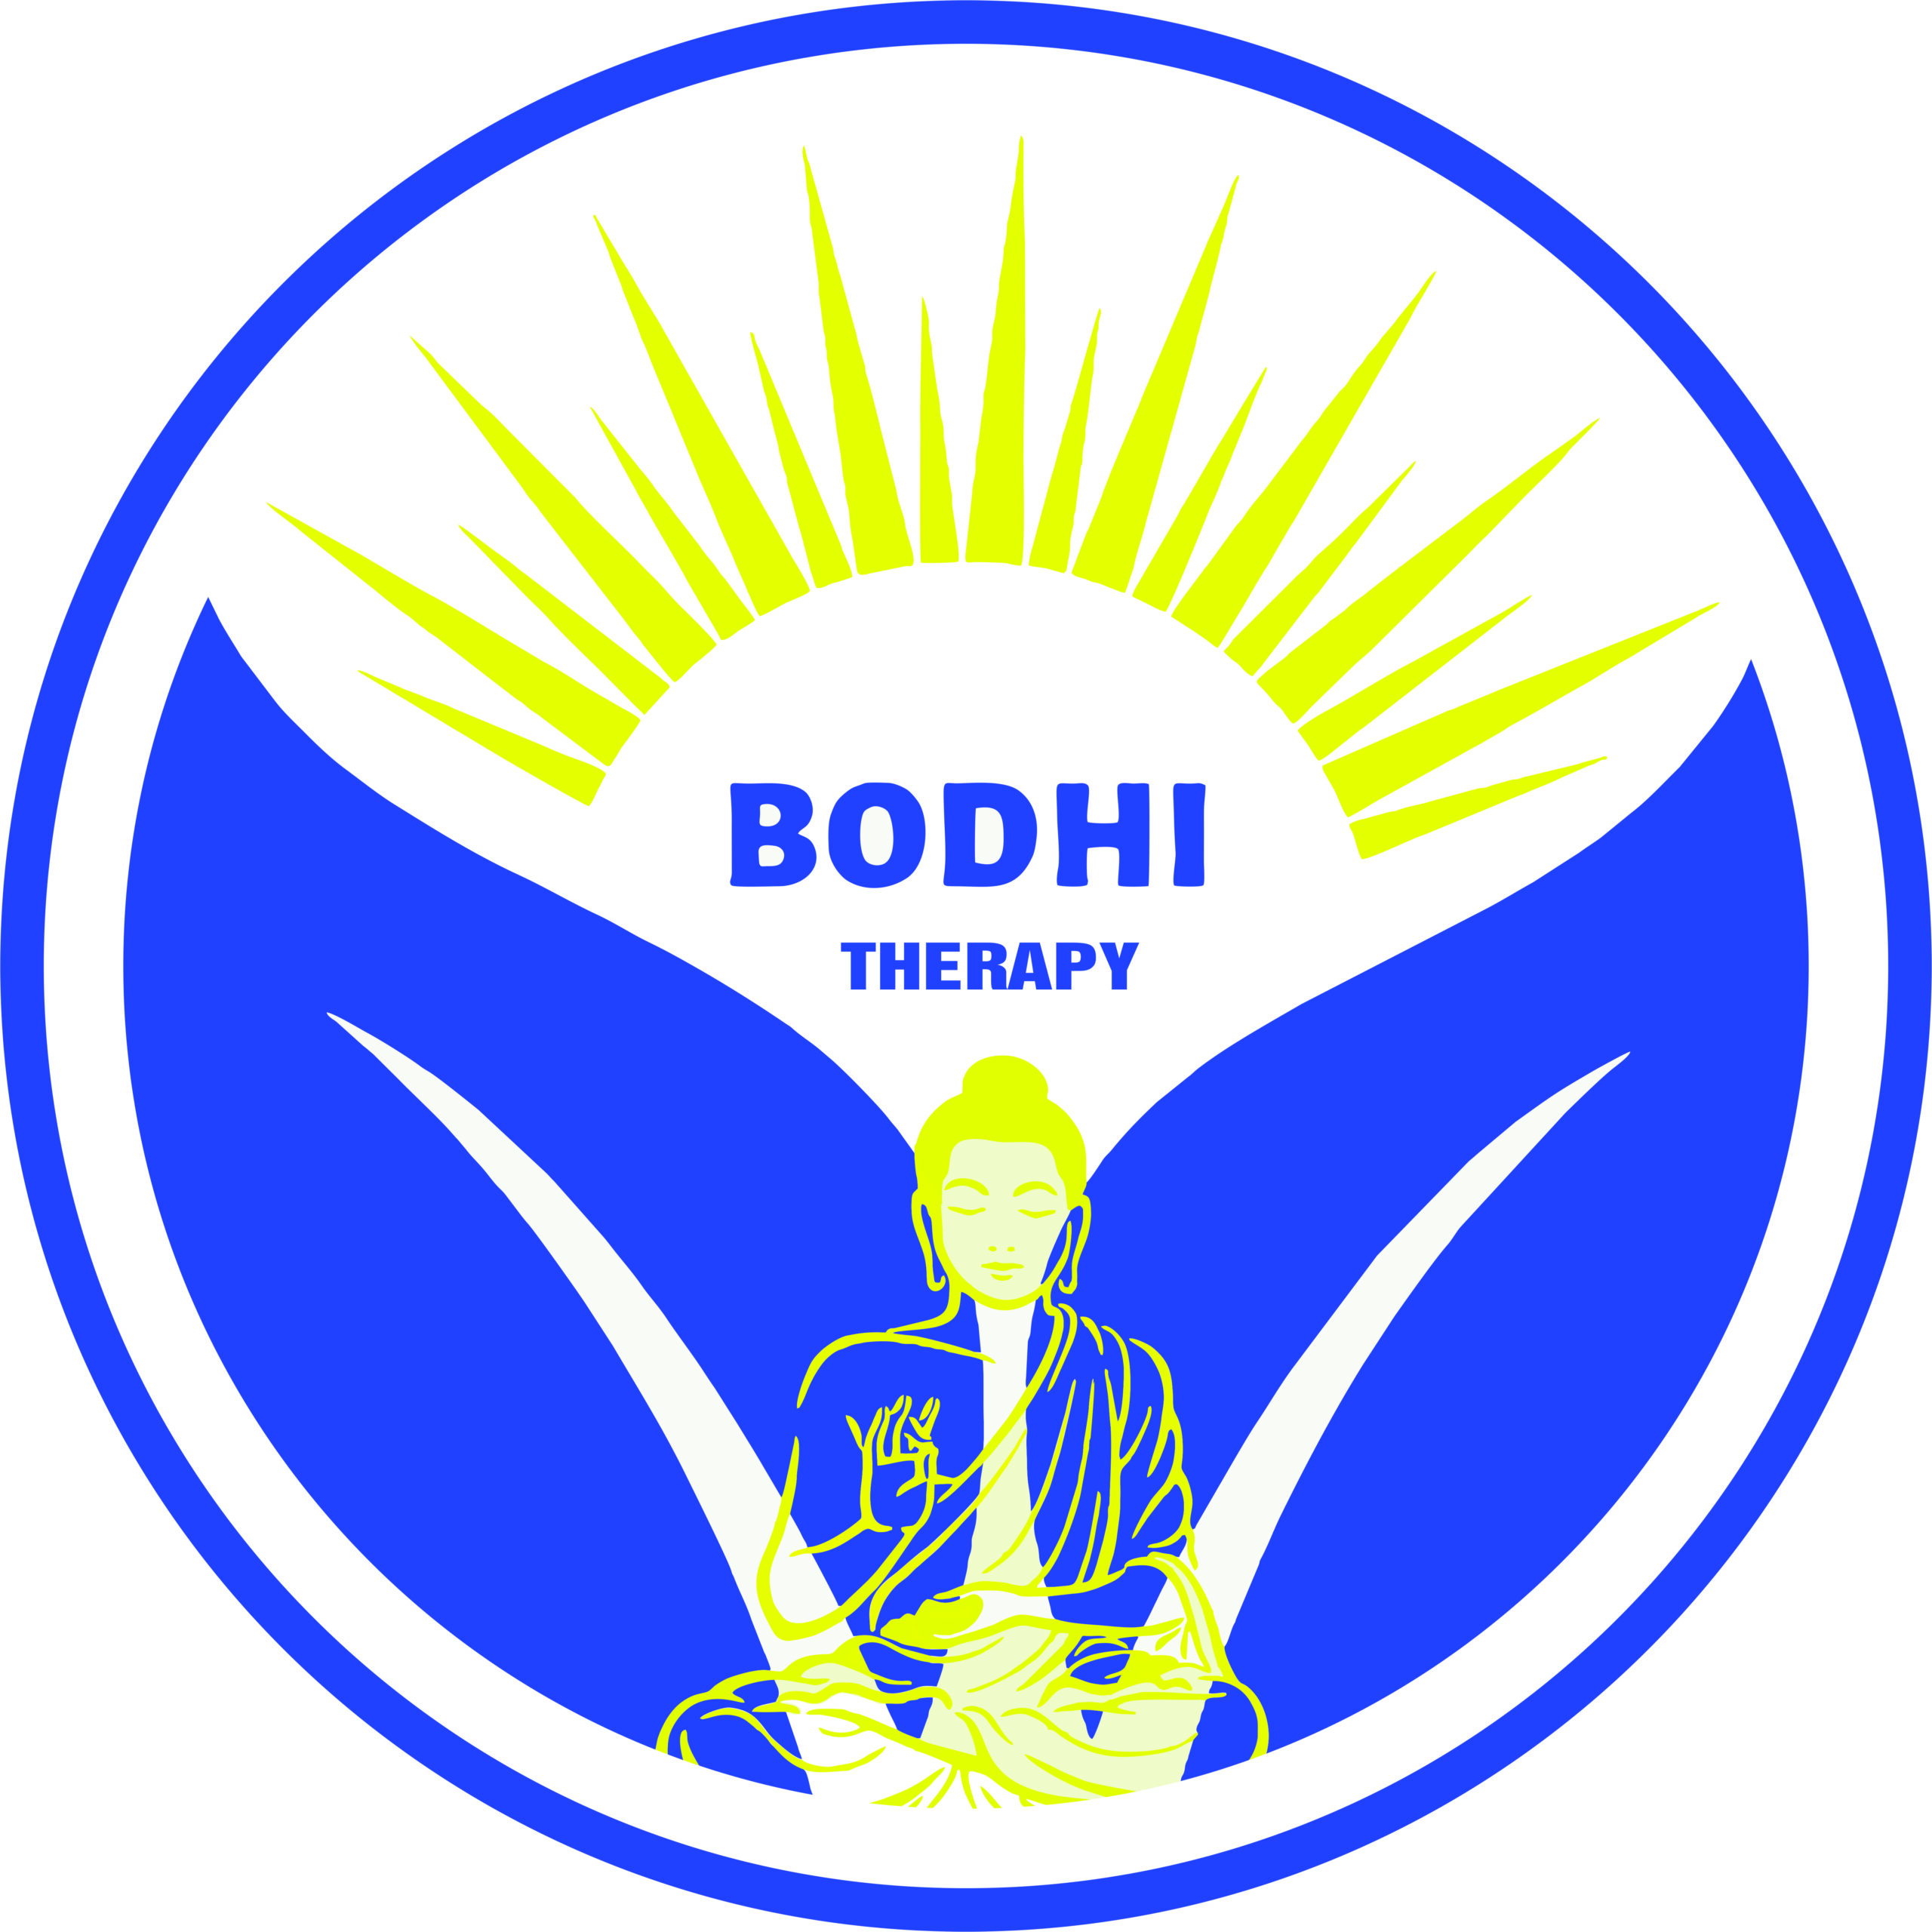 Bodhi Therapy